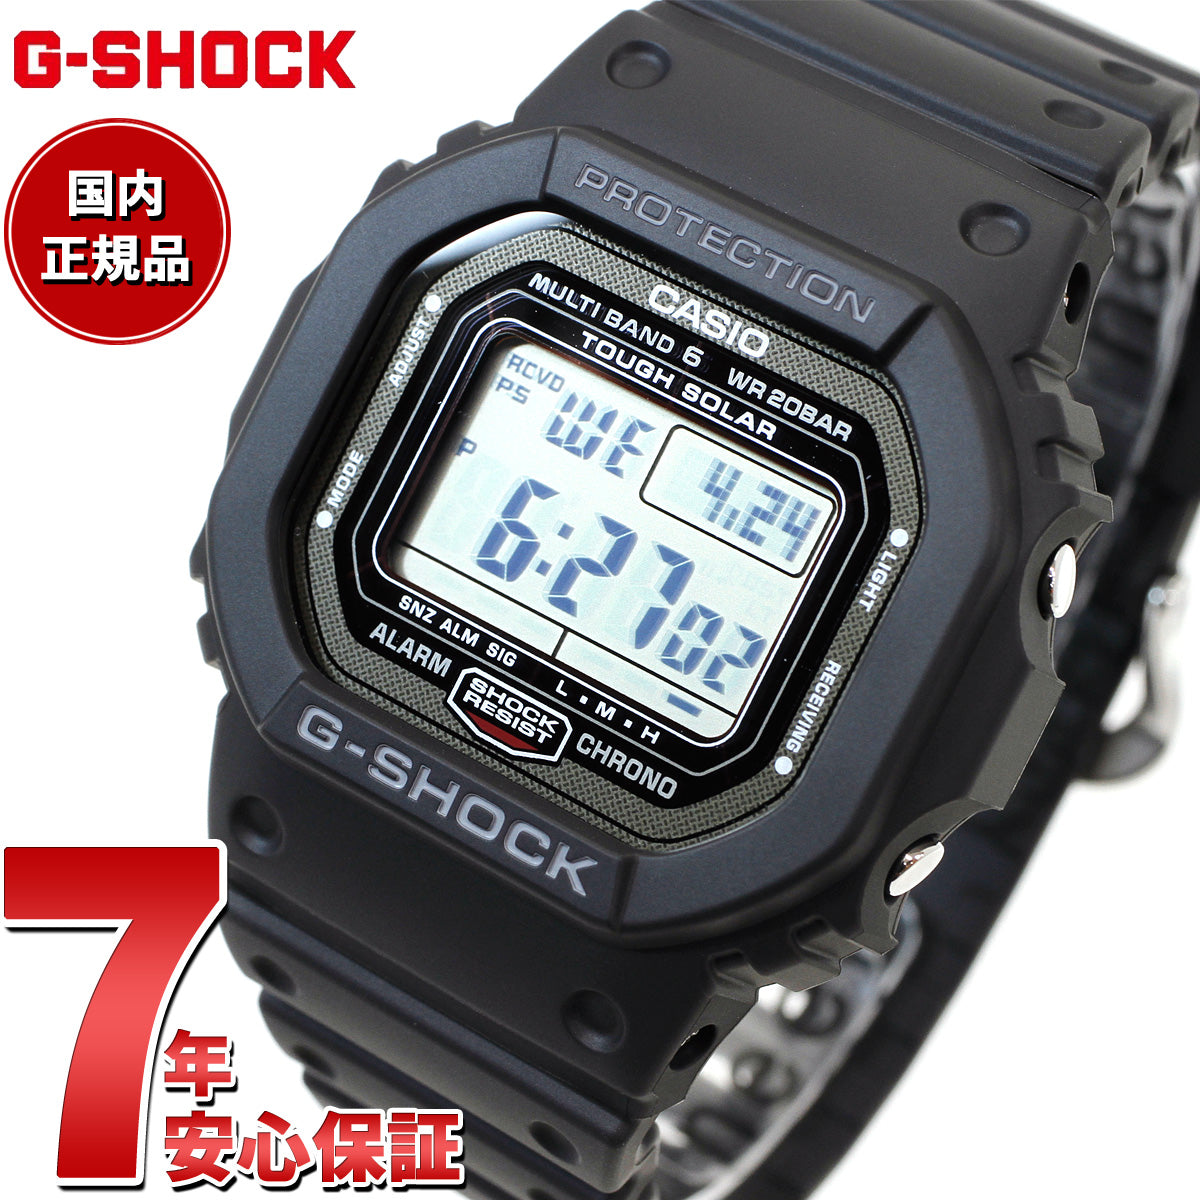 G-SHOCK Gショック 5600シリーズ GW-5000U-1JF メンズ 腕時計 電波ソーラー デジタル 樹脂バンド スクリューバック ブラック タフソーラー CASIO カシオ